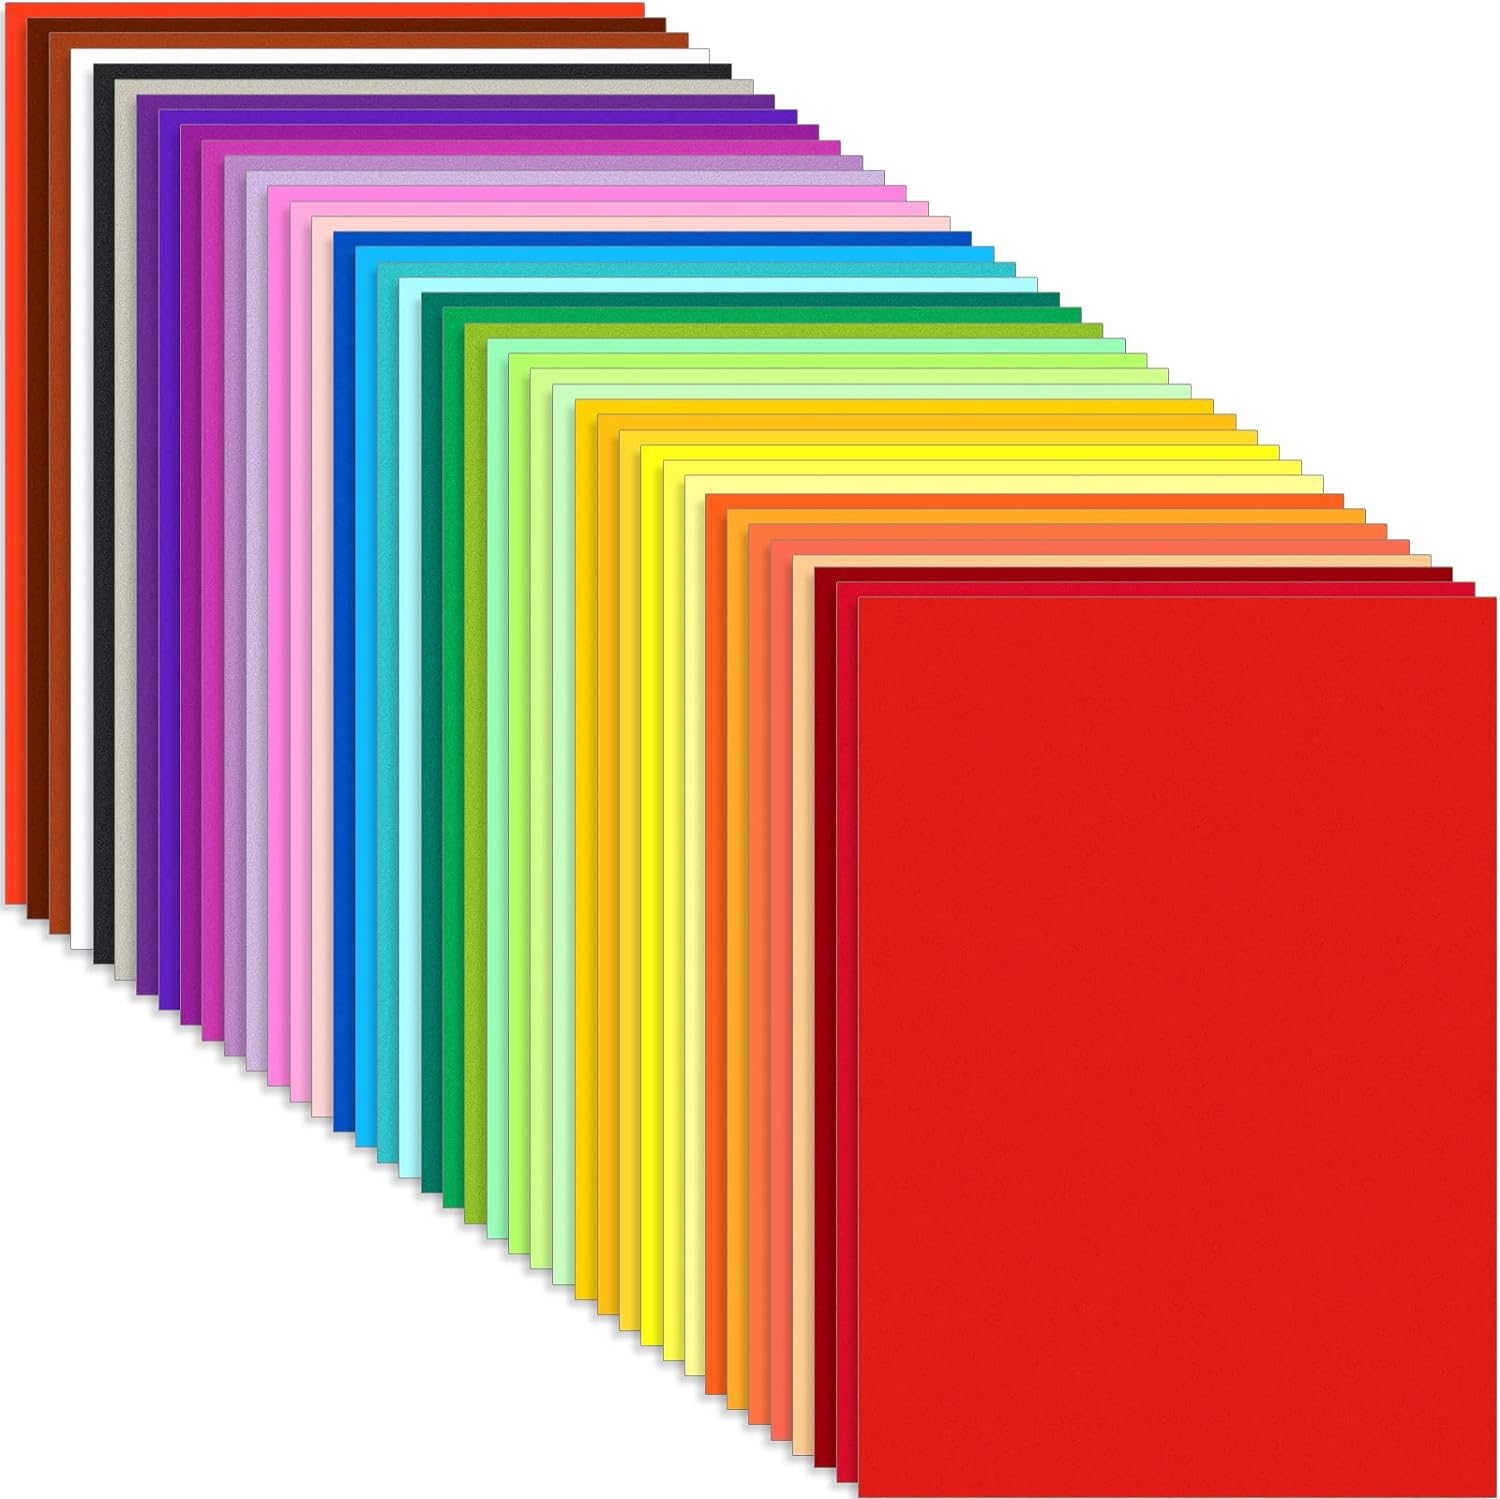 Astrobrights Mega Collection, Colored Cardstock, Punchy Pastel 5-Color  Assort